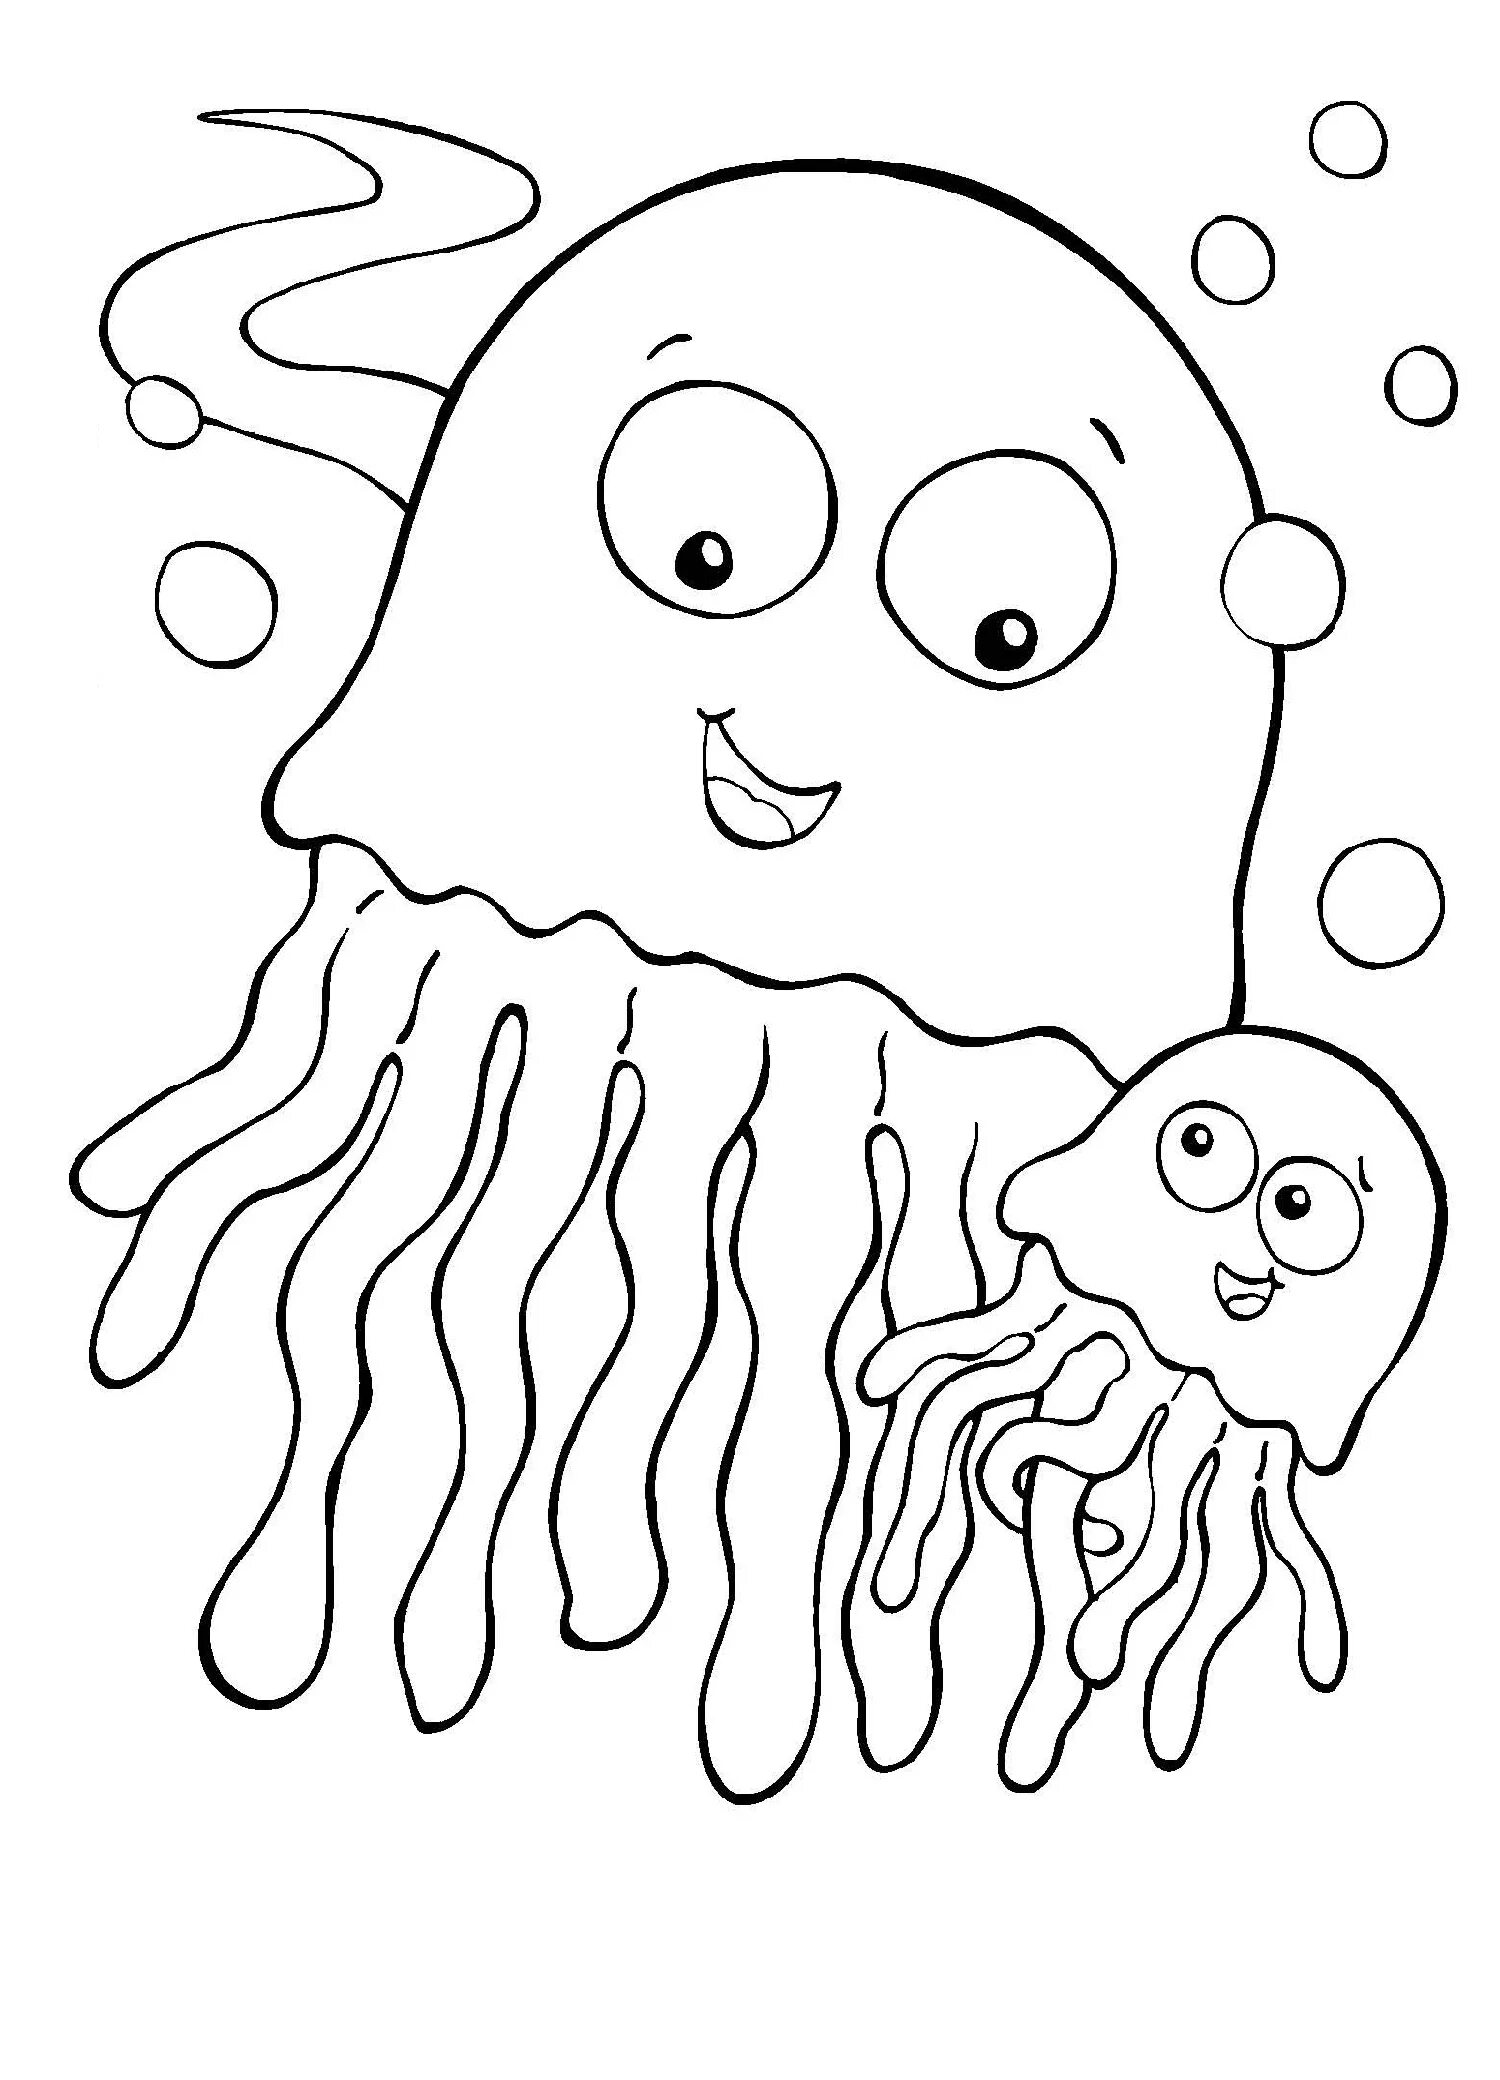 Jellyfish for kids #1